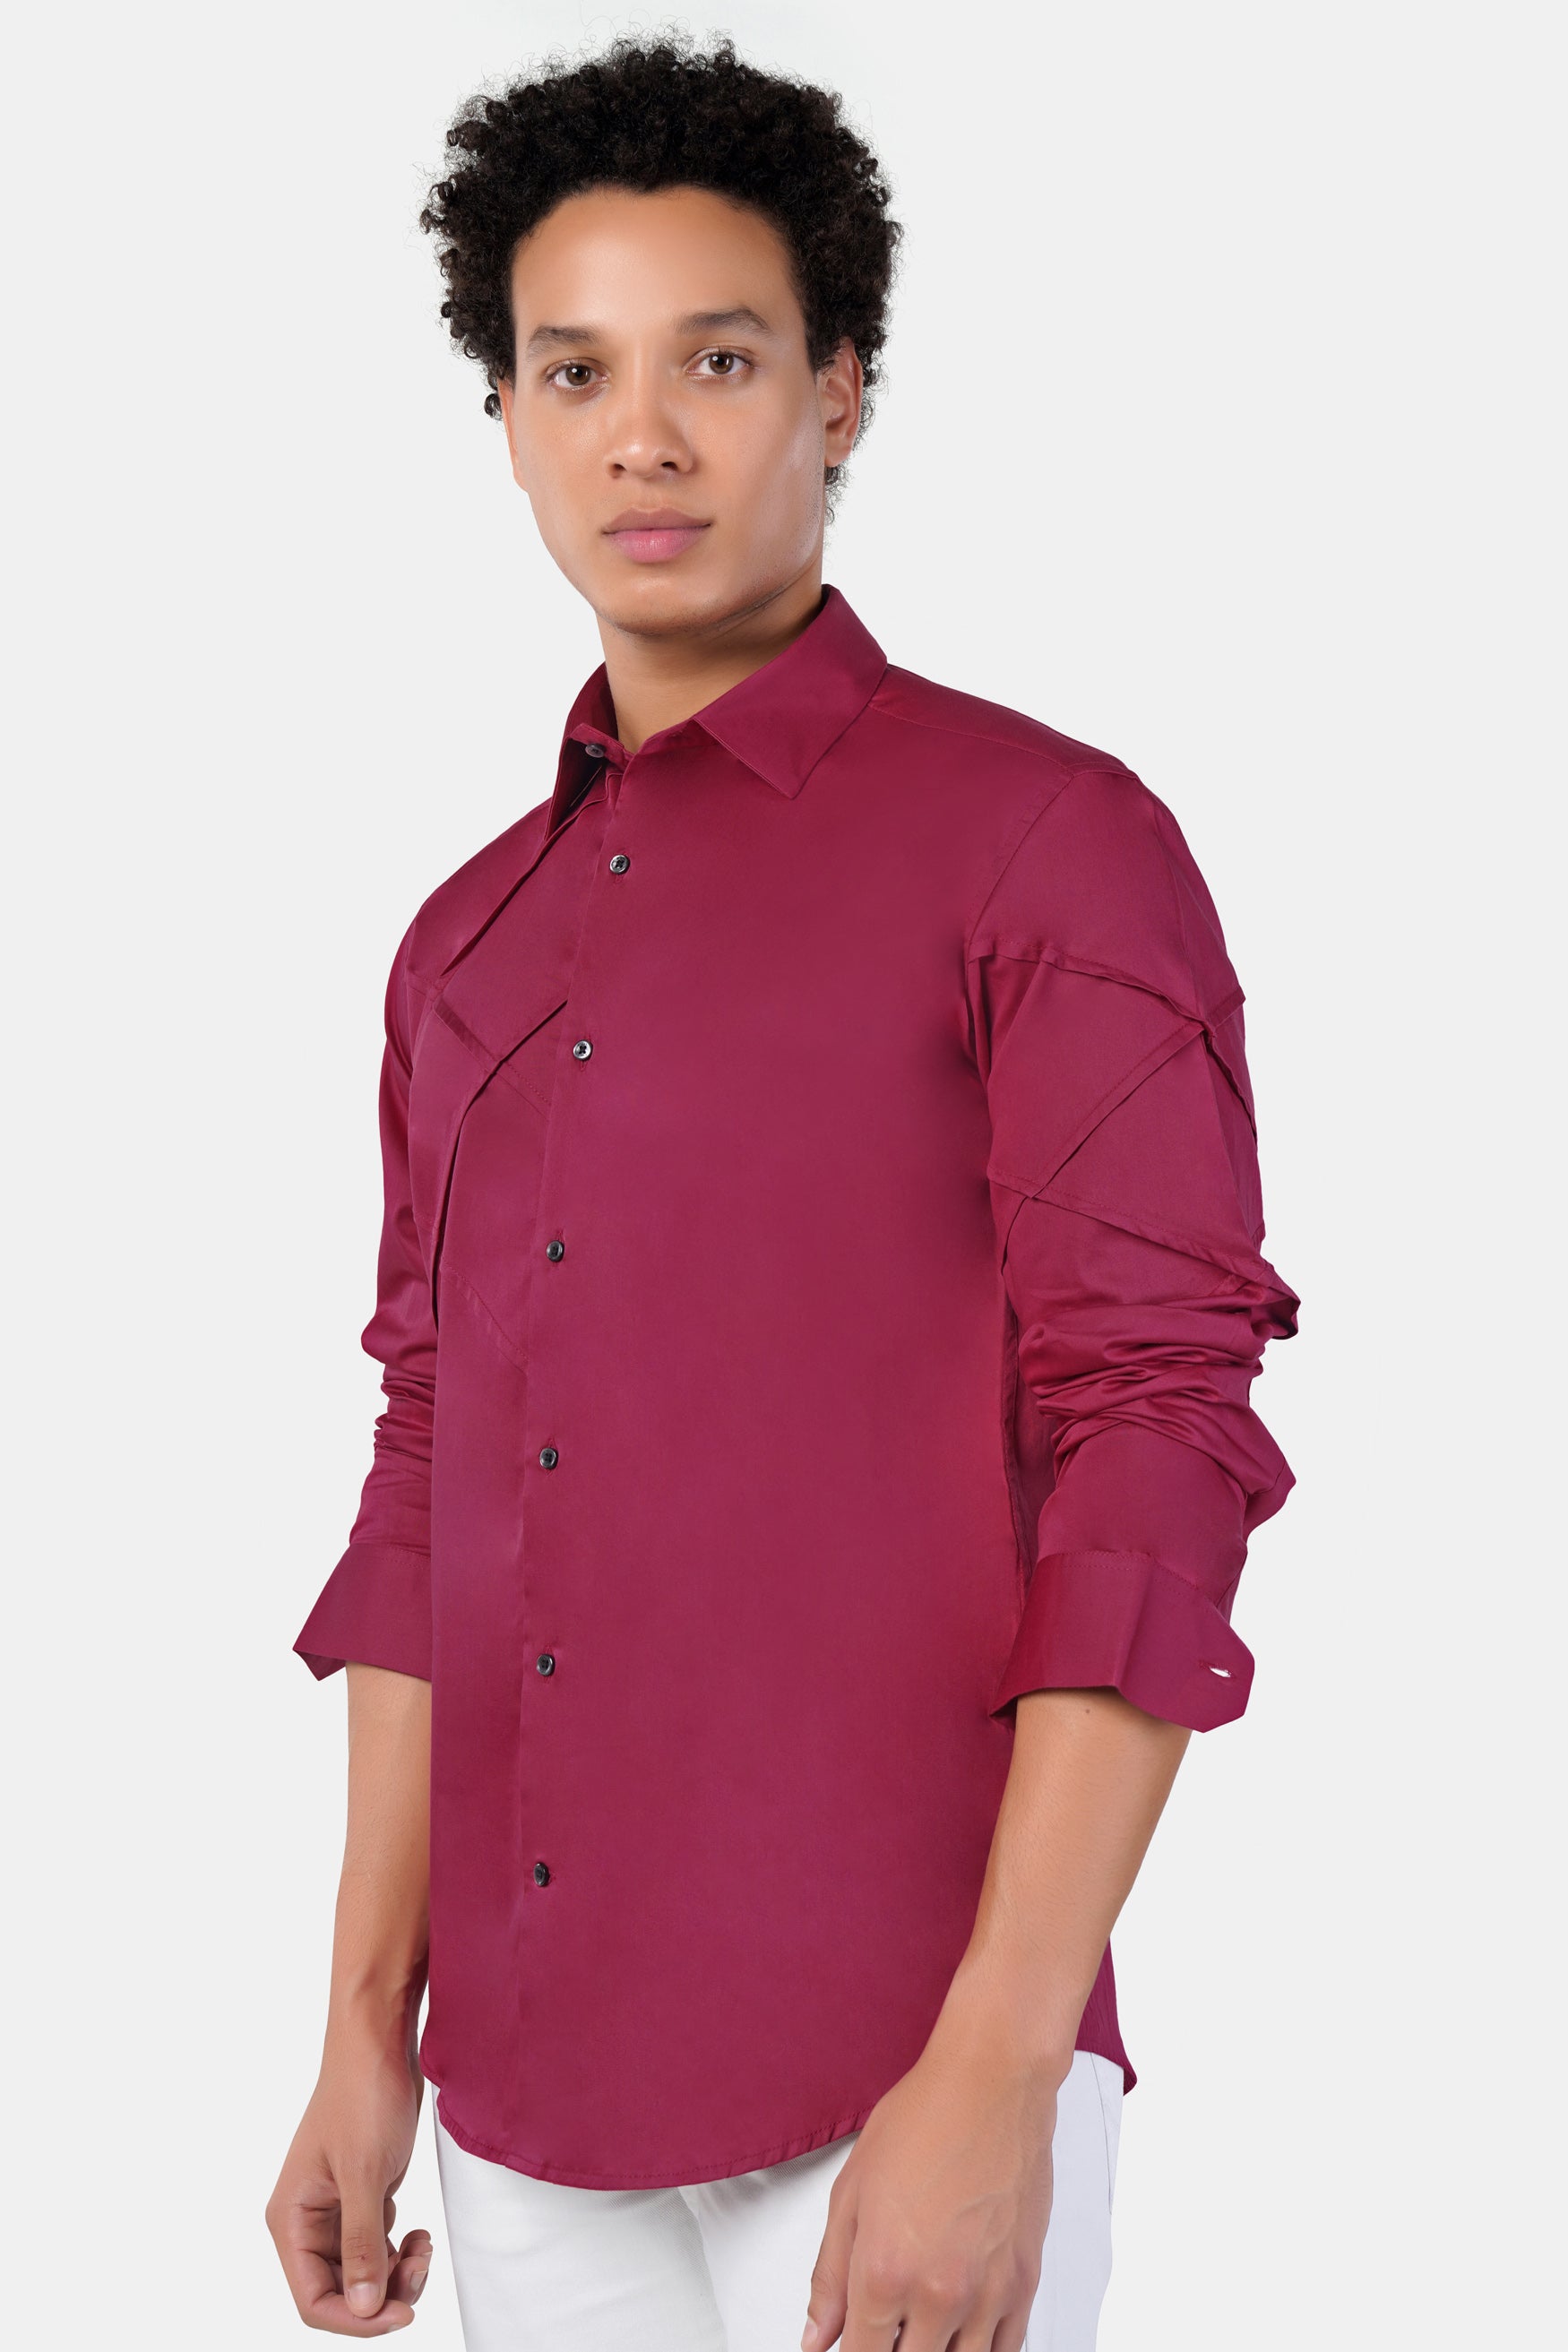 Camelot Pink Cross Tucks Subtle Sheen Super Soft Premium Cotton Designer Shirt